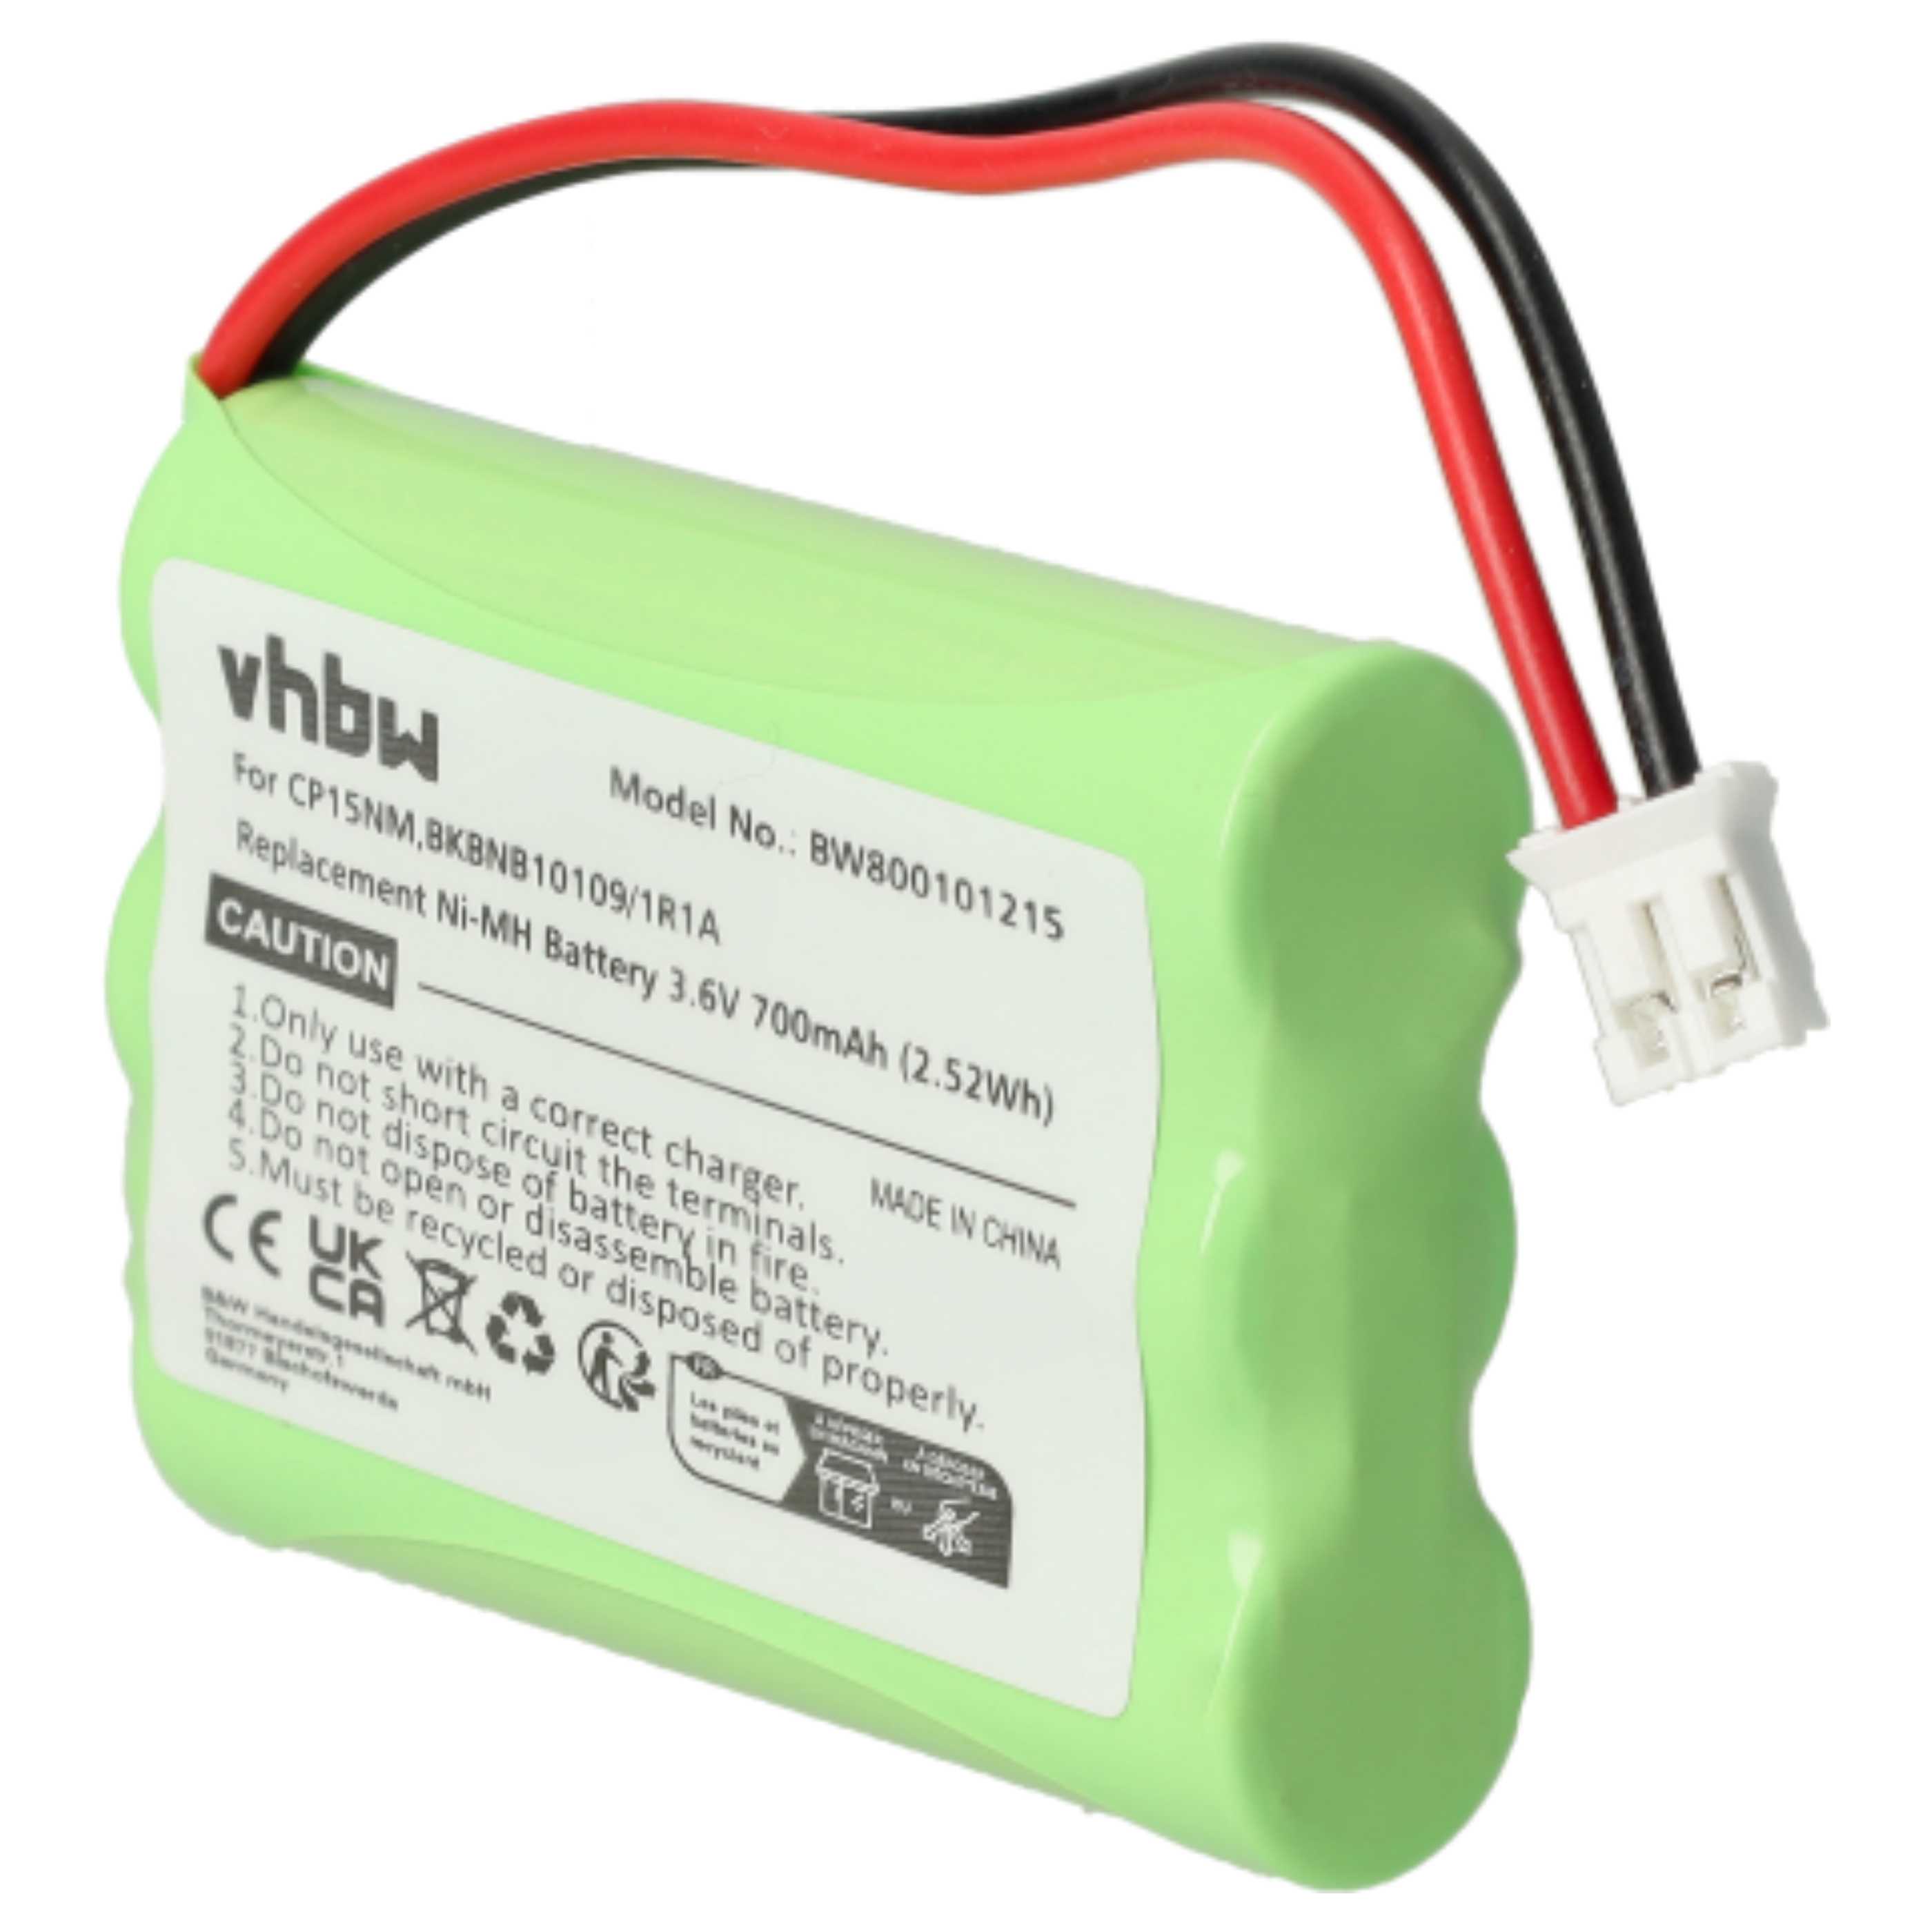 Baby Monitor Battery Replacement for Graco BATT-2795 - 700 mAh 3.6 V NiMH